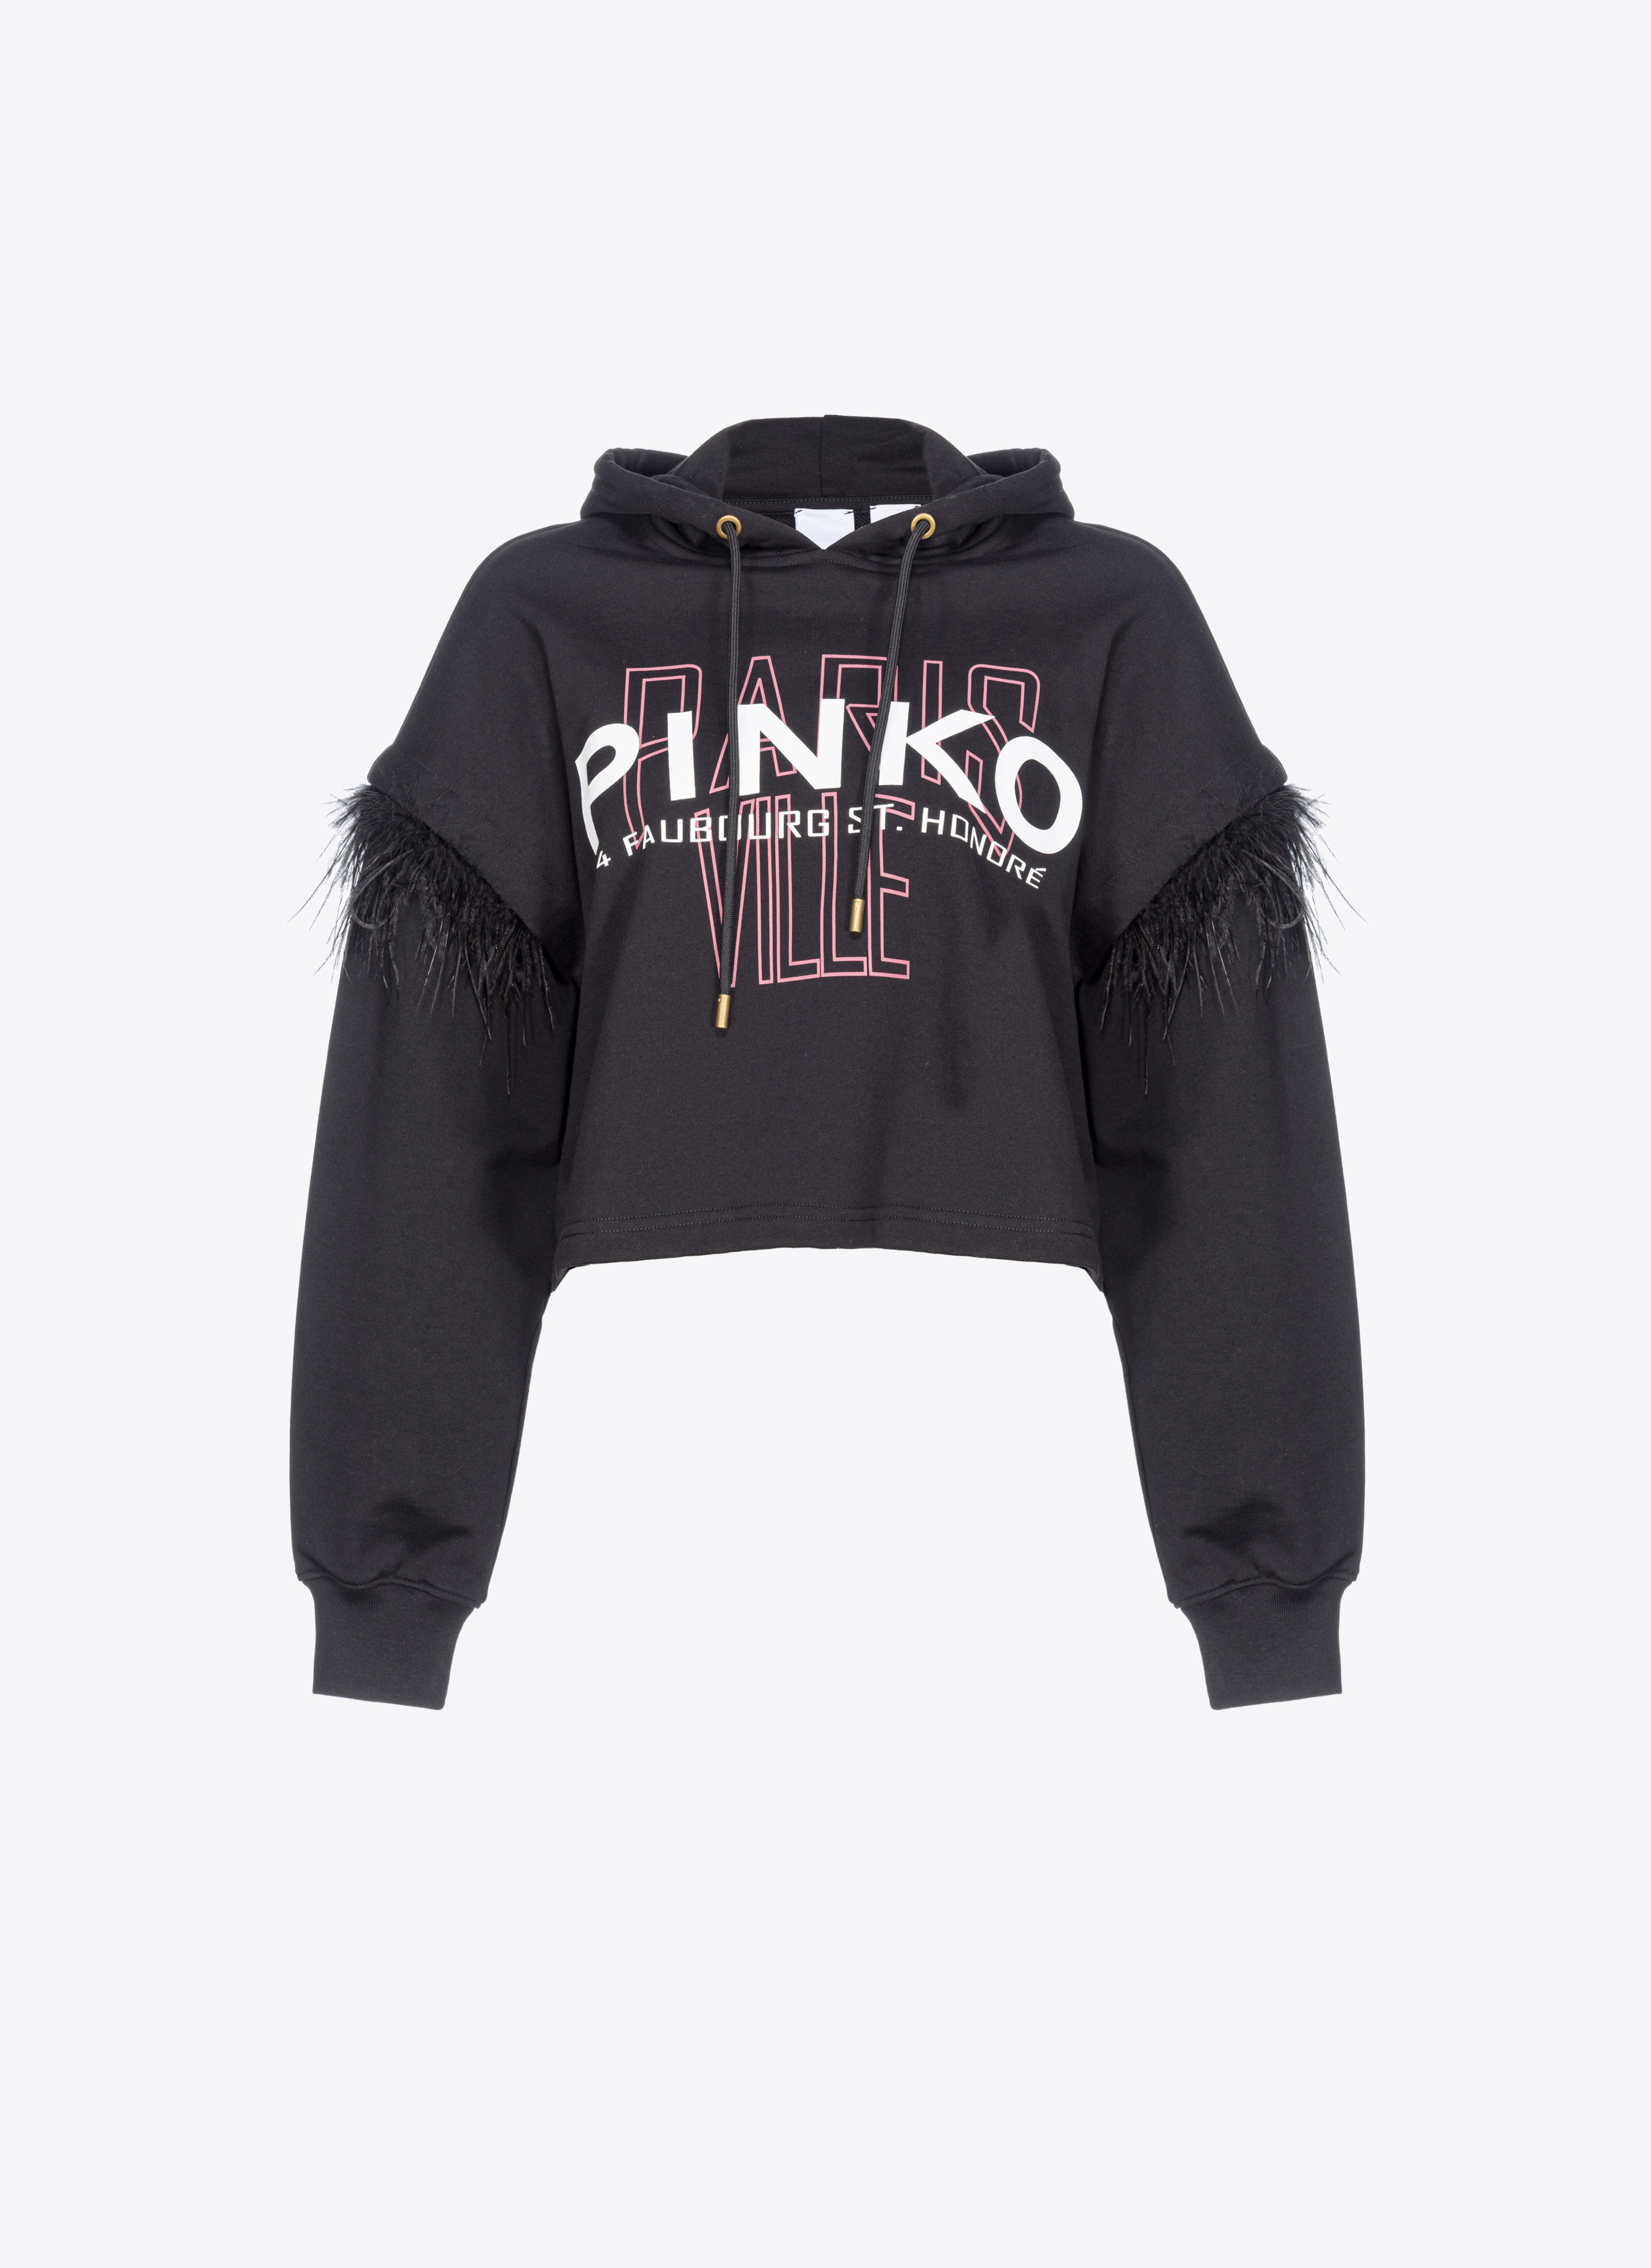 Pinko Cities Sweatshirt With Feathers In Noir Limousine